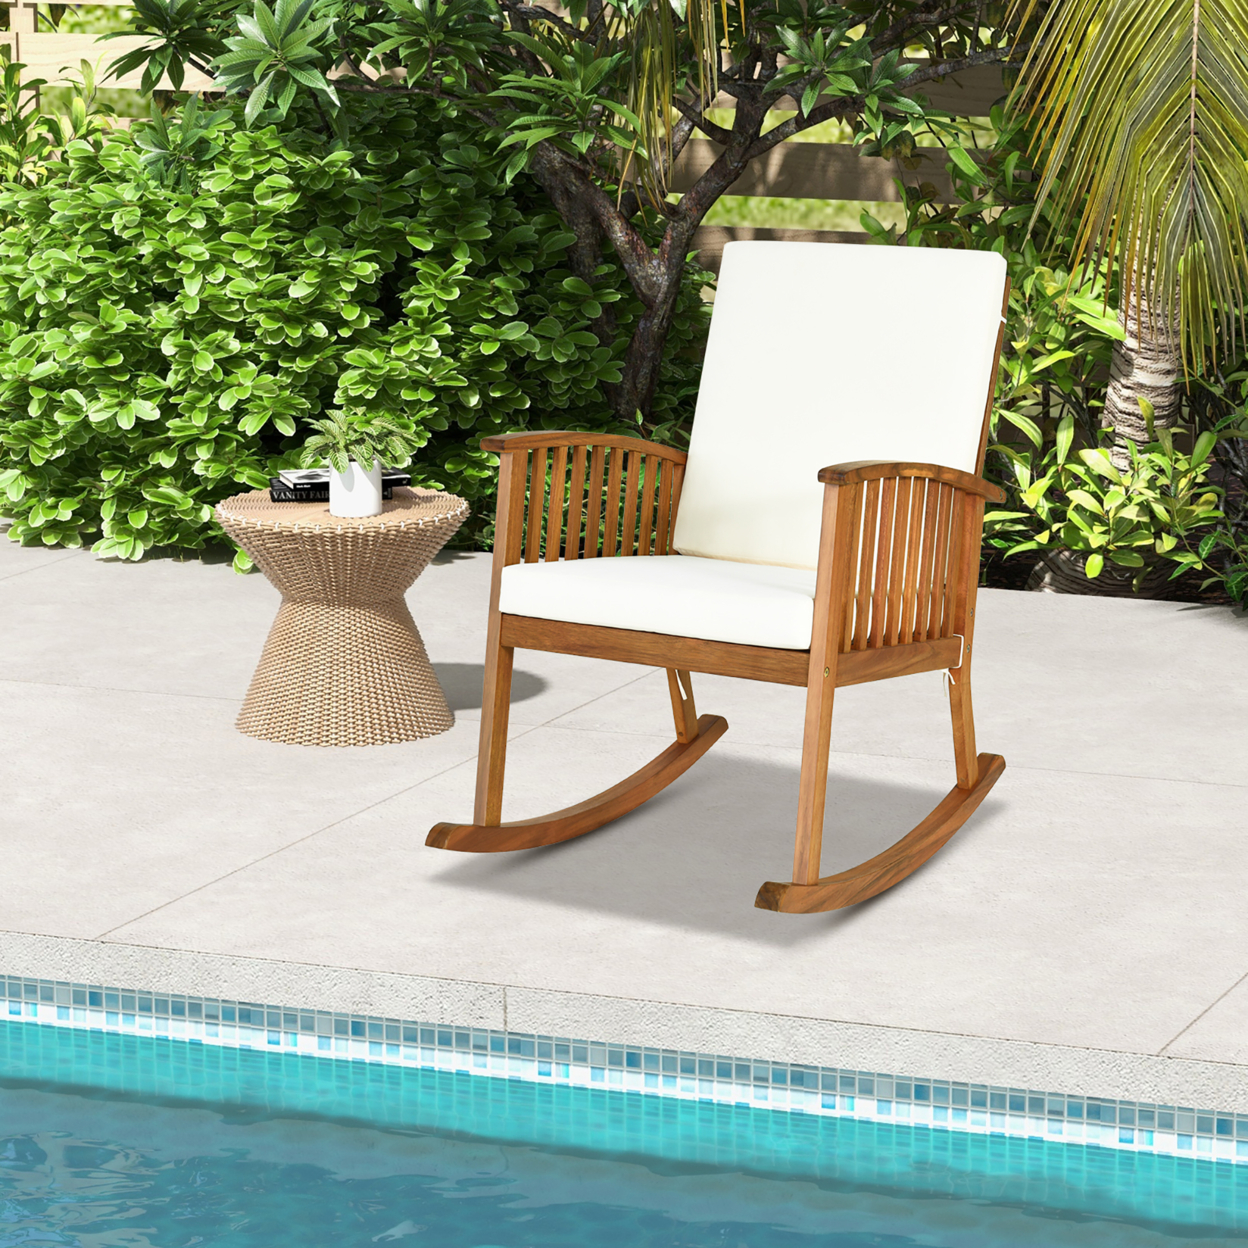 Patio Wooden Rocking Chair Lawn Garden Outdoor W/ Armrest Cushion